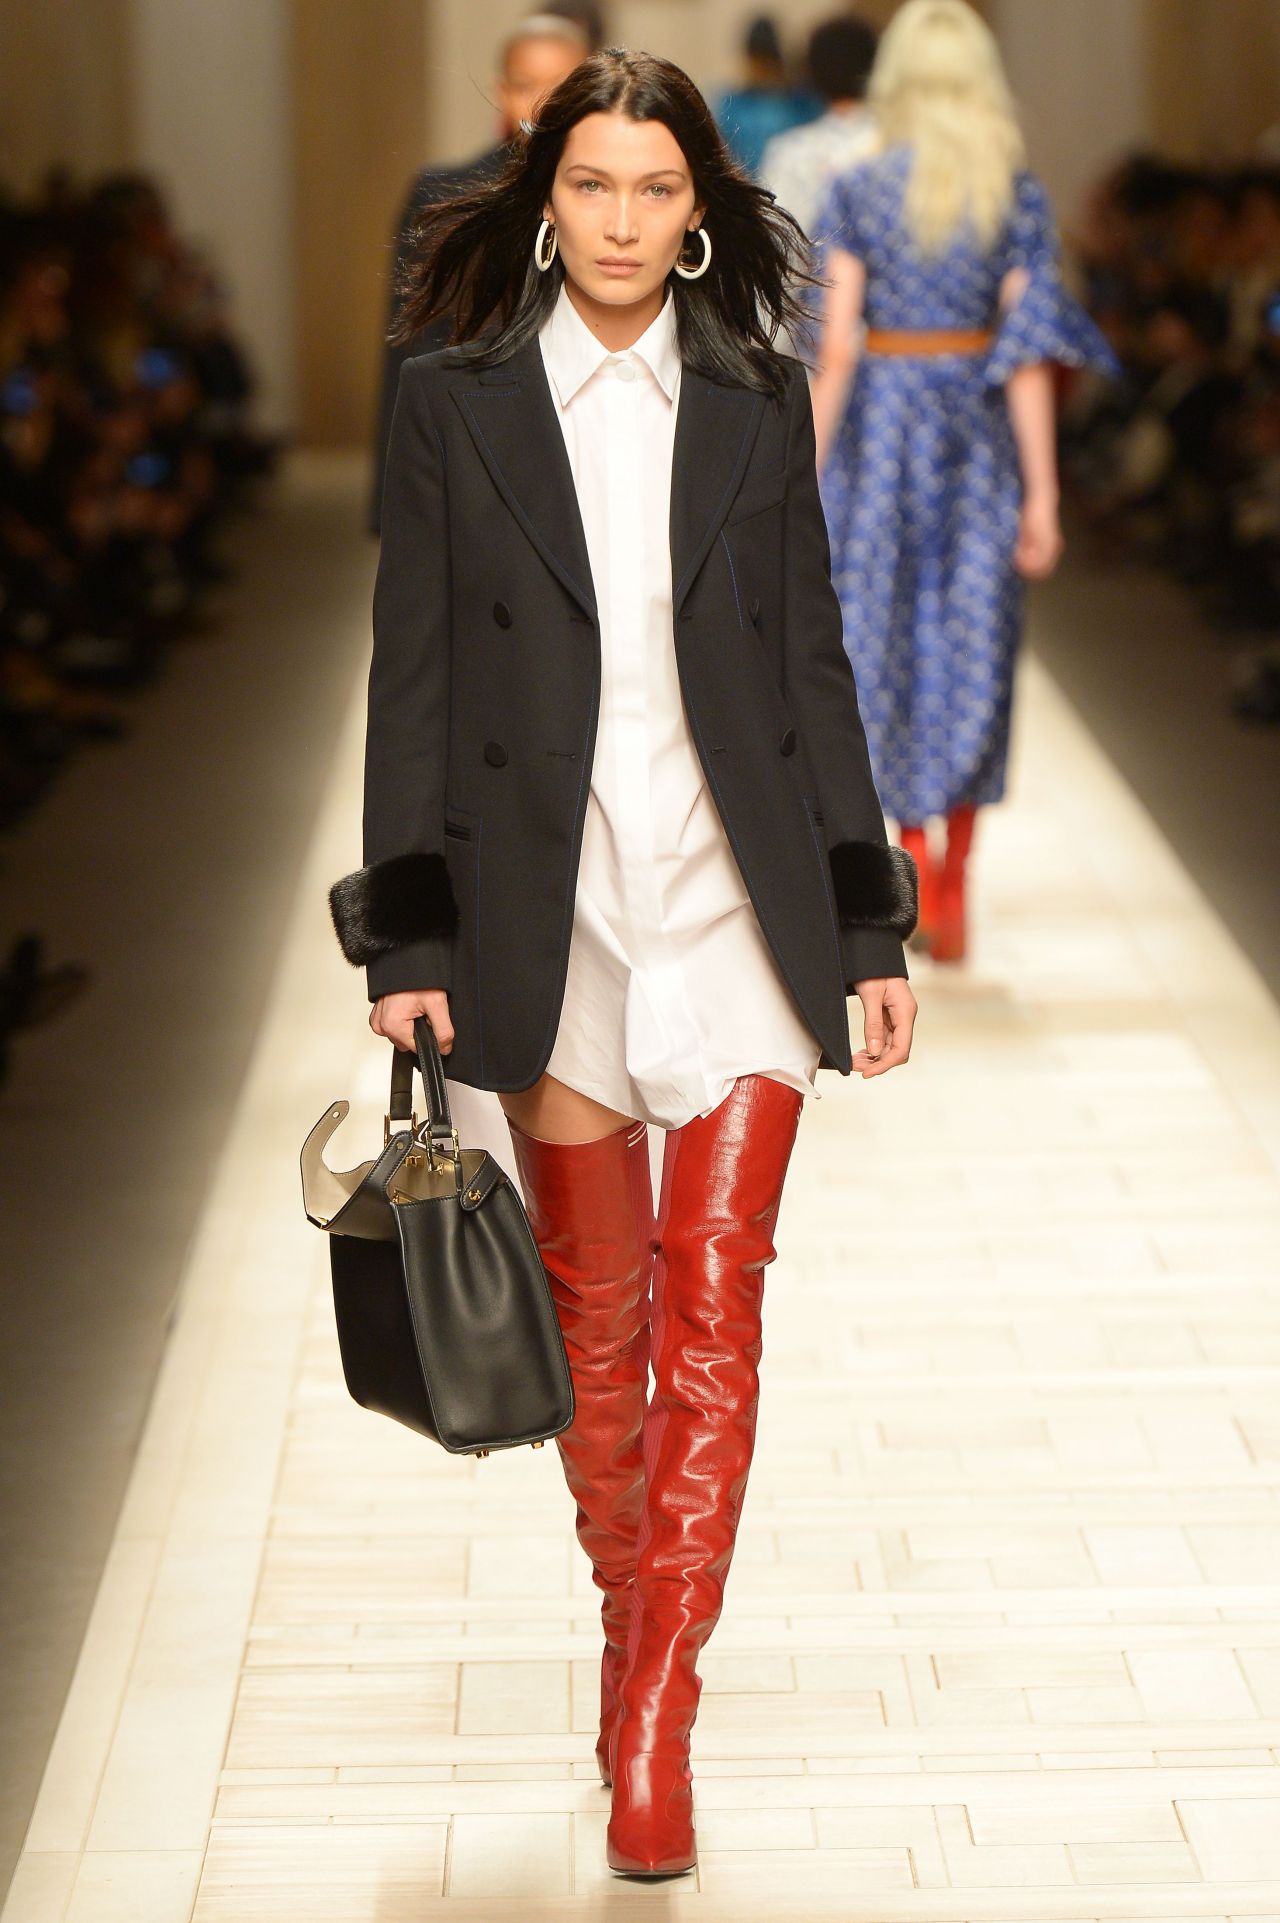 Blla Hadid Supermodel Runway Walk at Milan Fashion Week - Fendi Show 2 ...